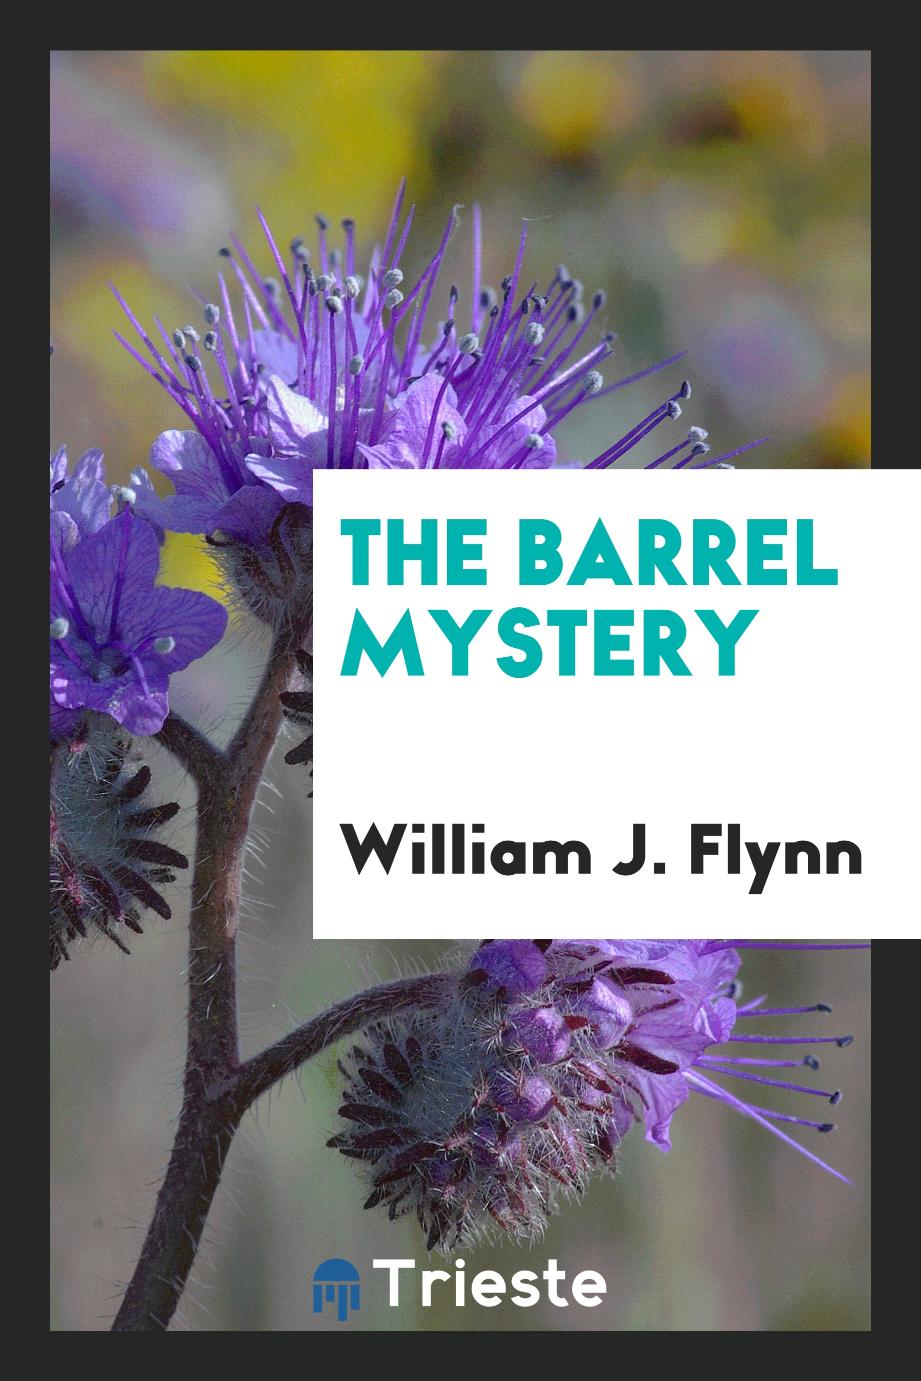 The barrel mystery